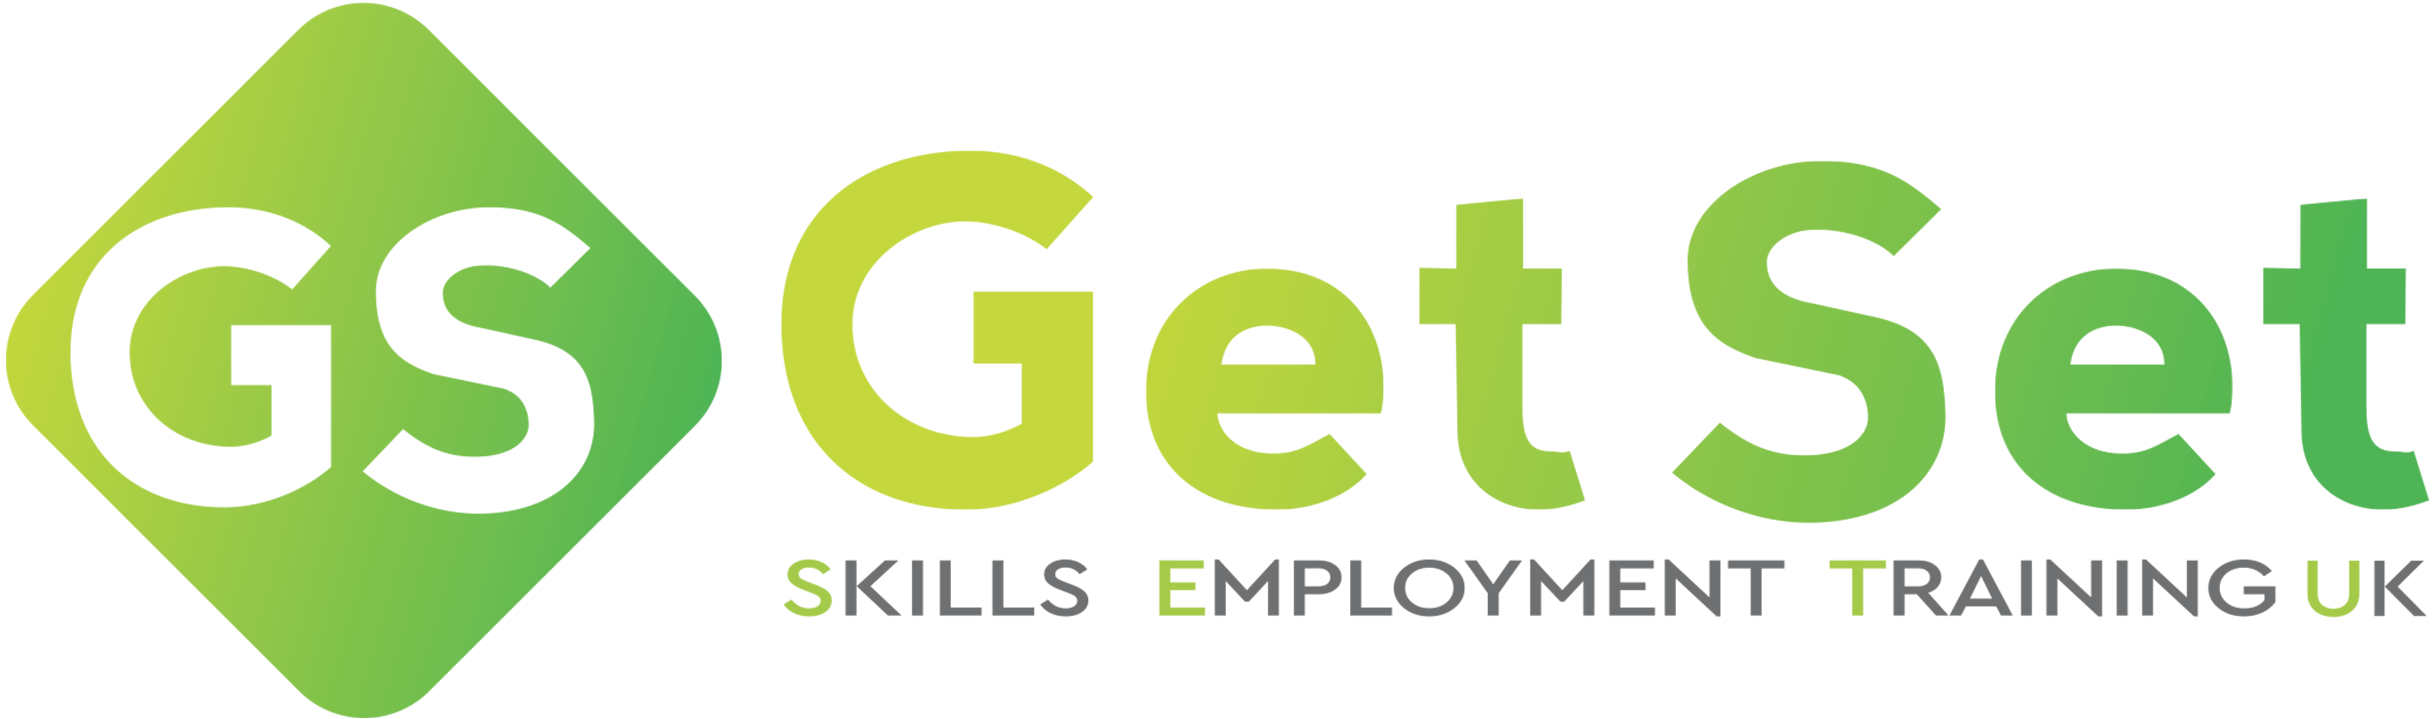 logo for Get Skills Employment &Training Ltd.